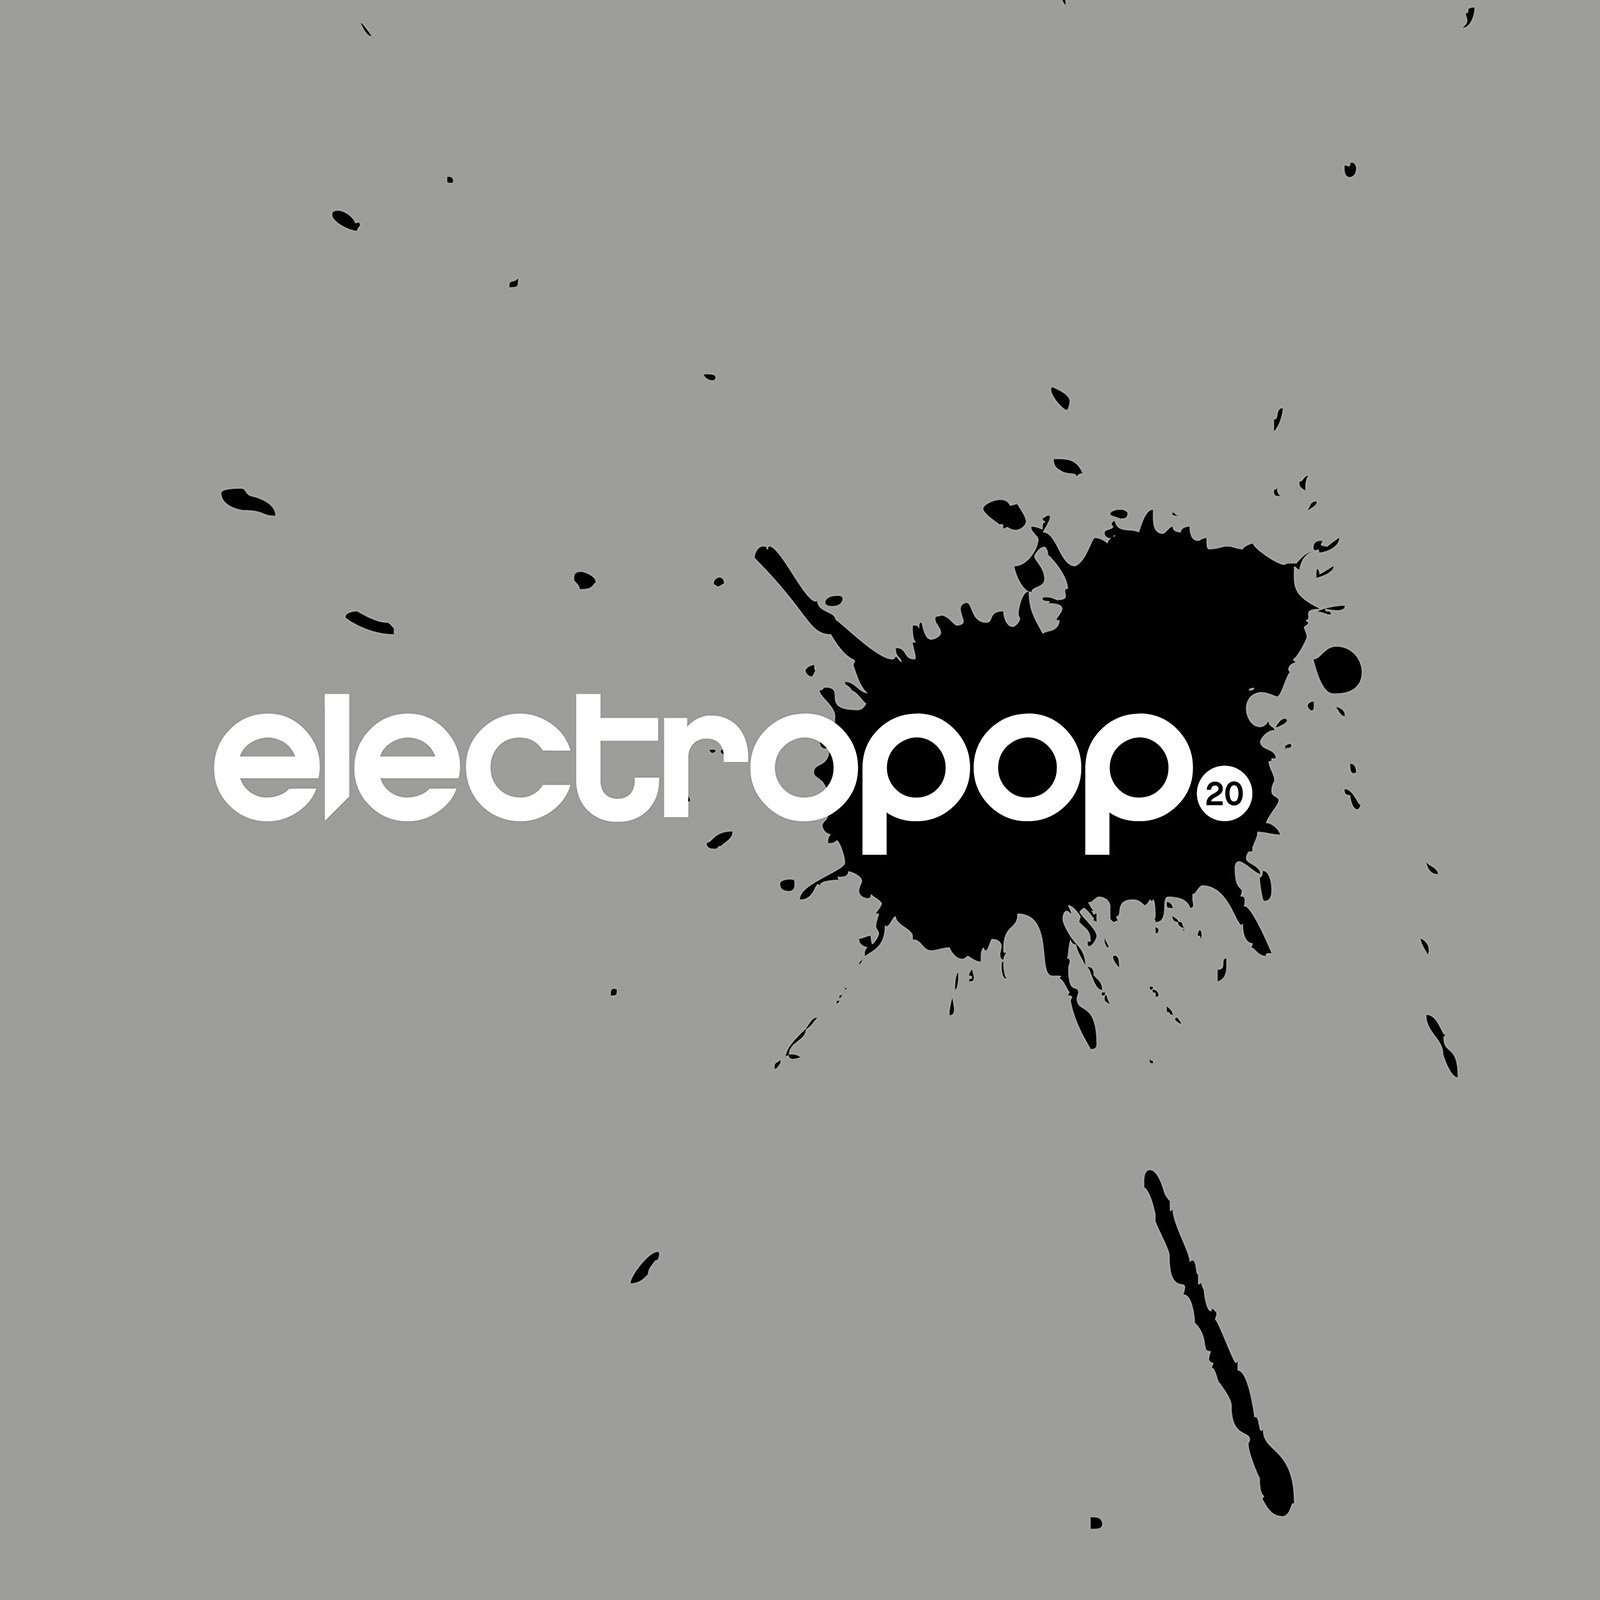 electropop.20